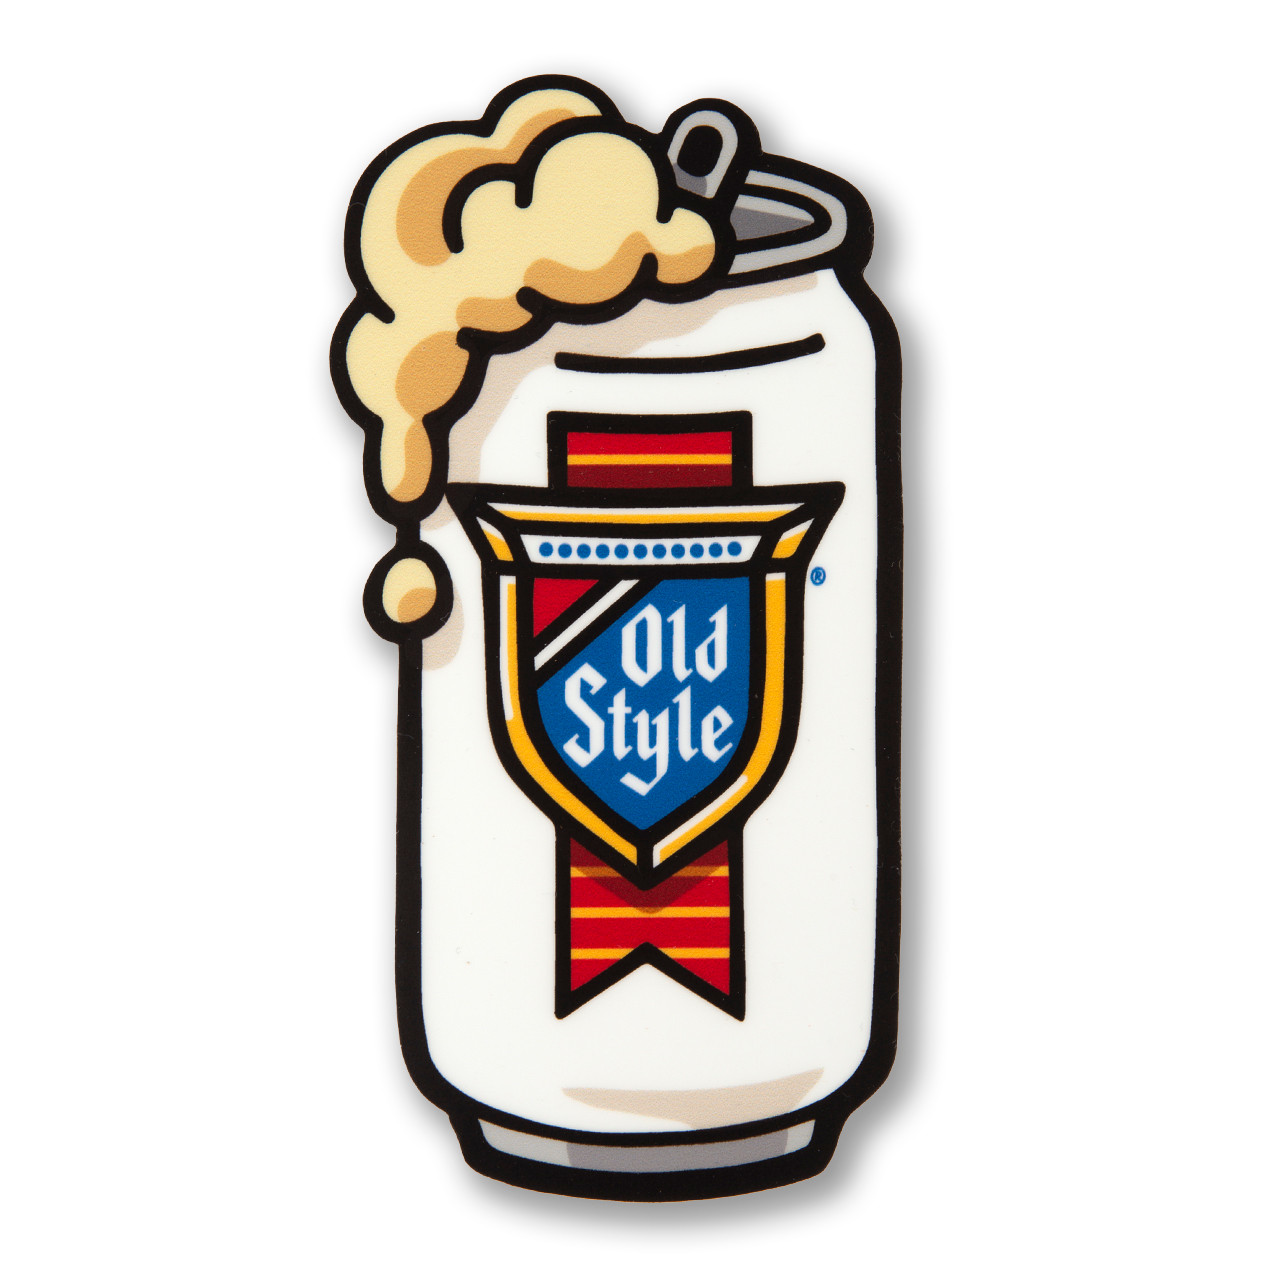 Beer Season Sticker - U.S. Custom Stickers